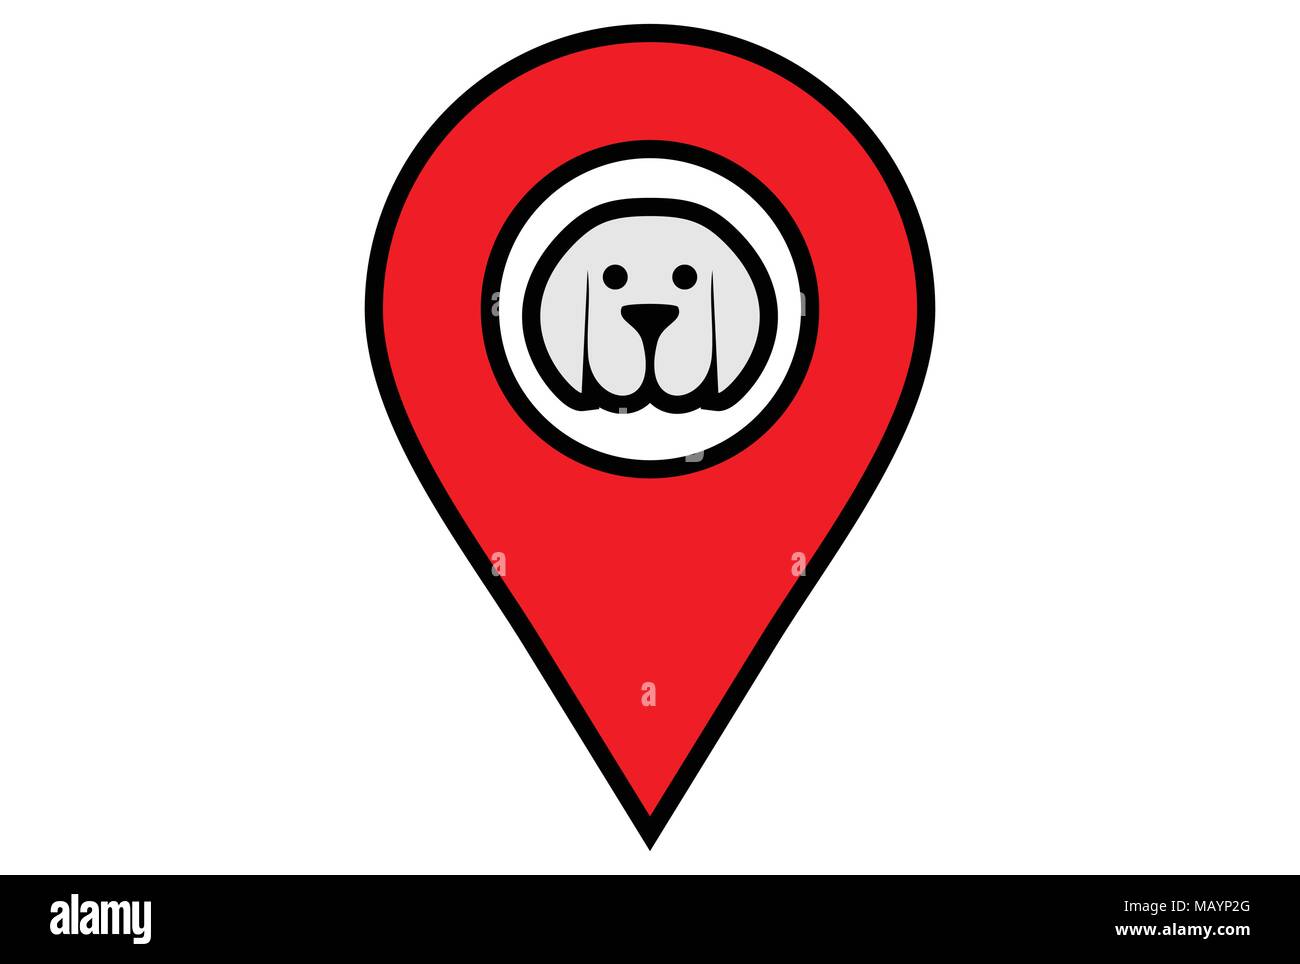 dog location logo vector icon Stock Vector